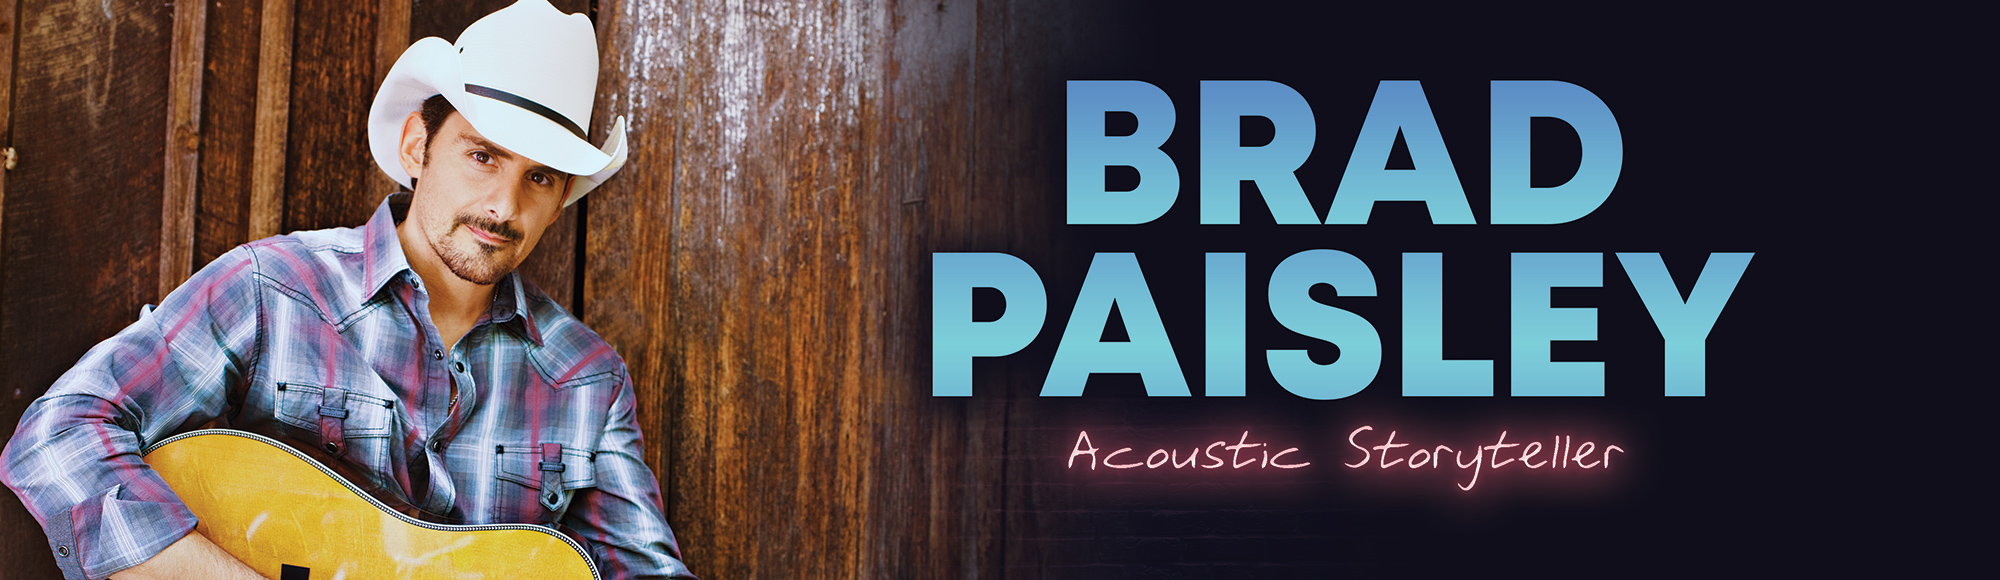 Brad Paisley Show Las Vegas Tickets & Reviews